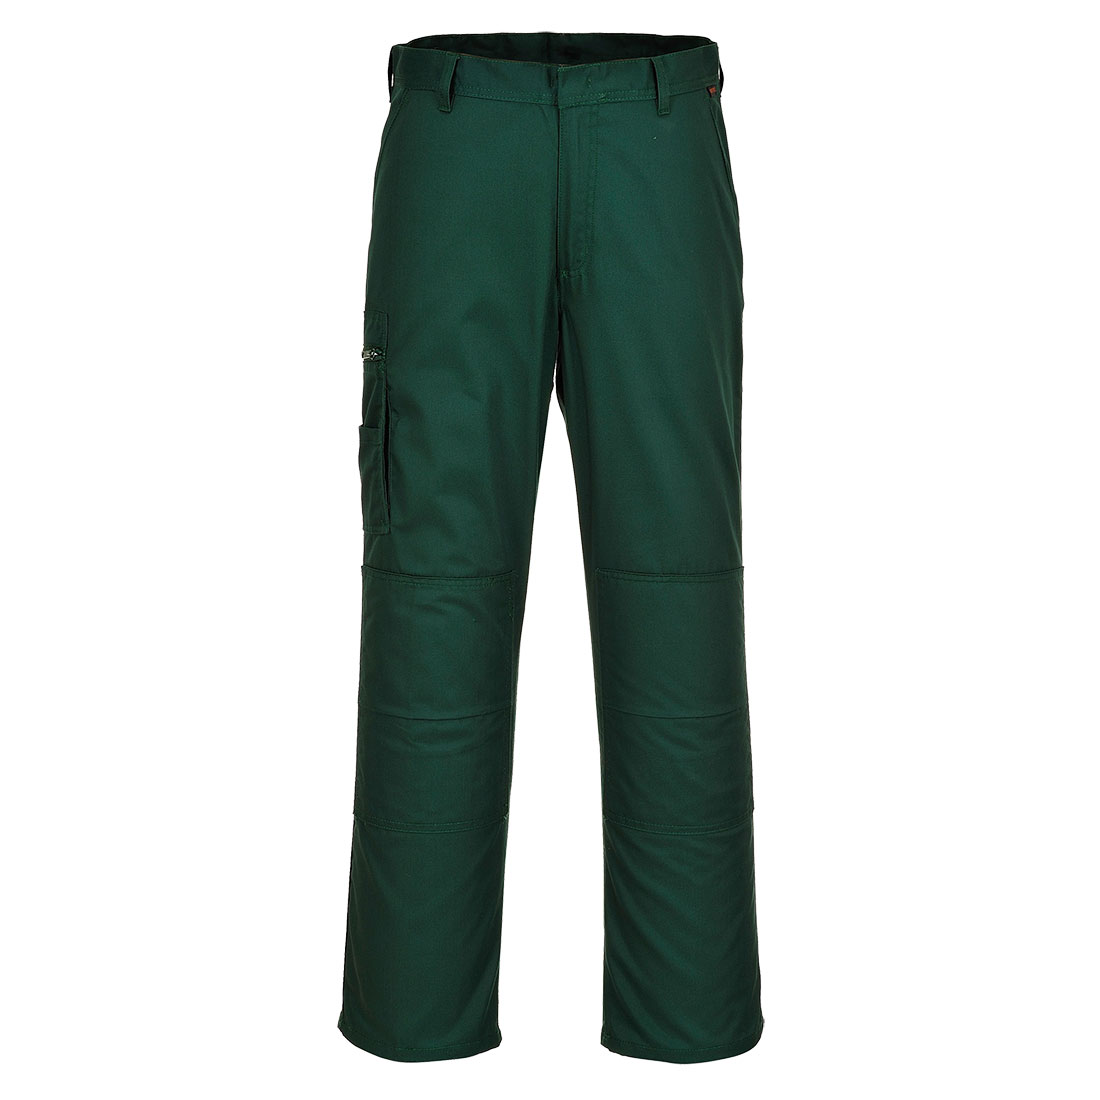 Super Click Pc Trousers Bottle Green - Corporate Wear Ireland